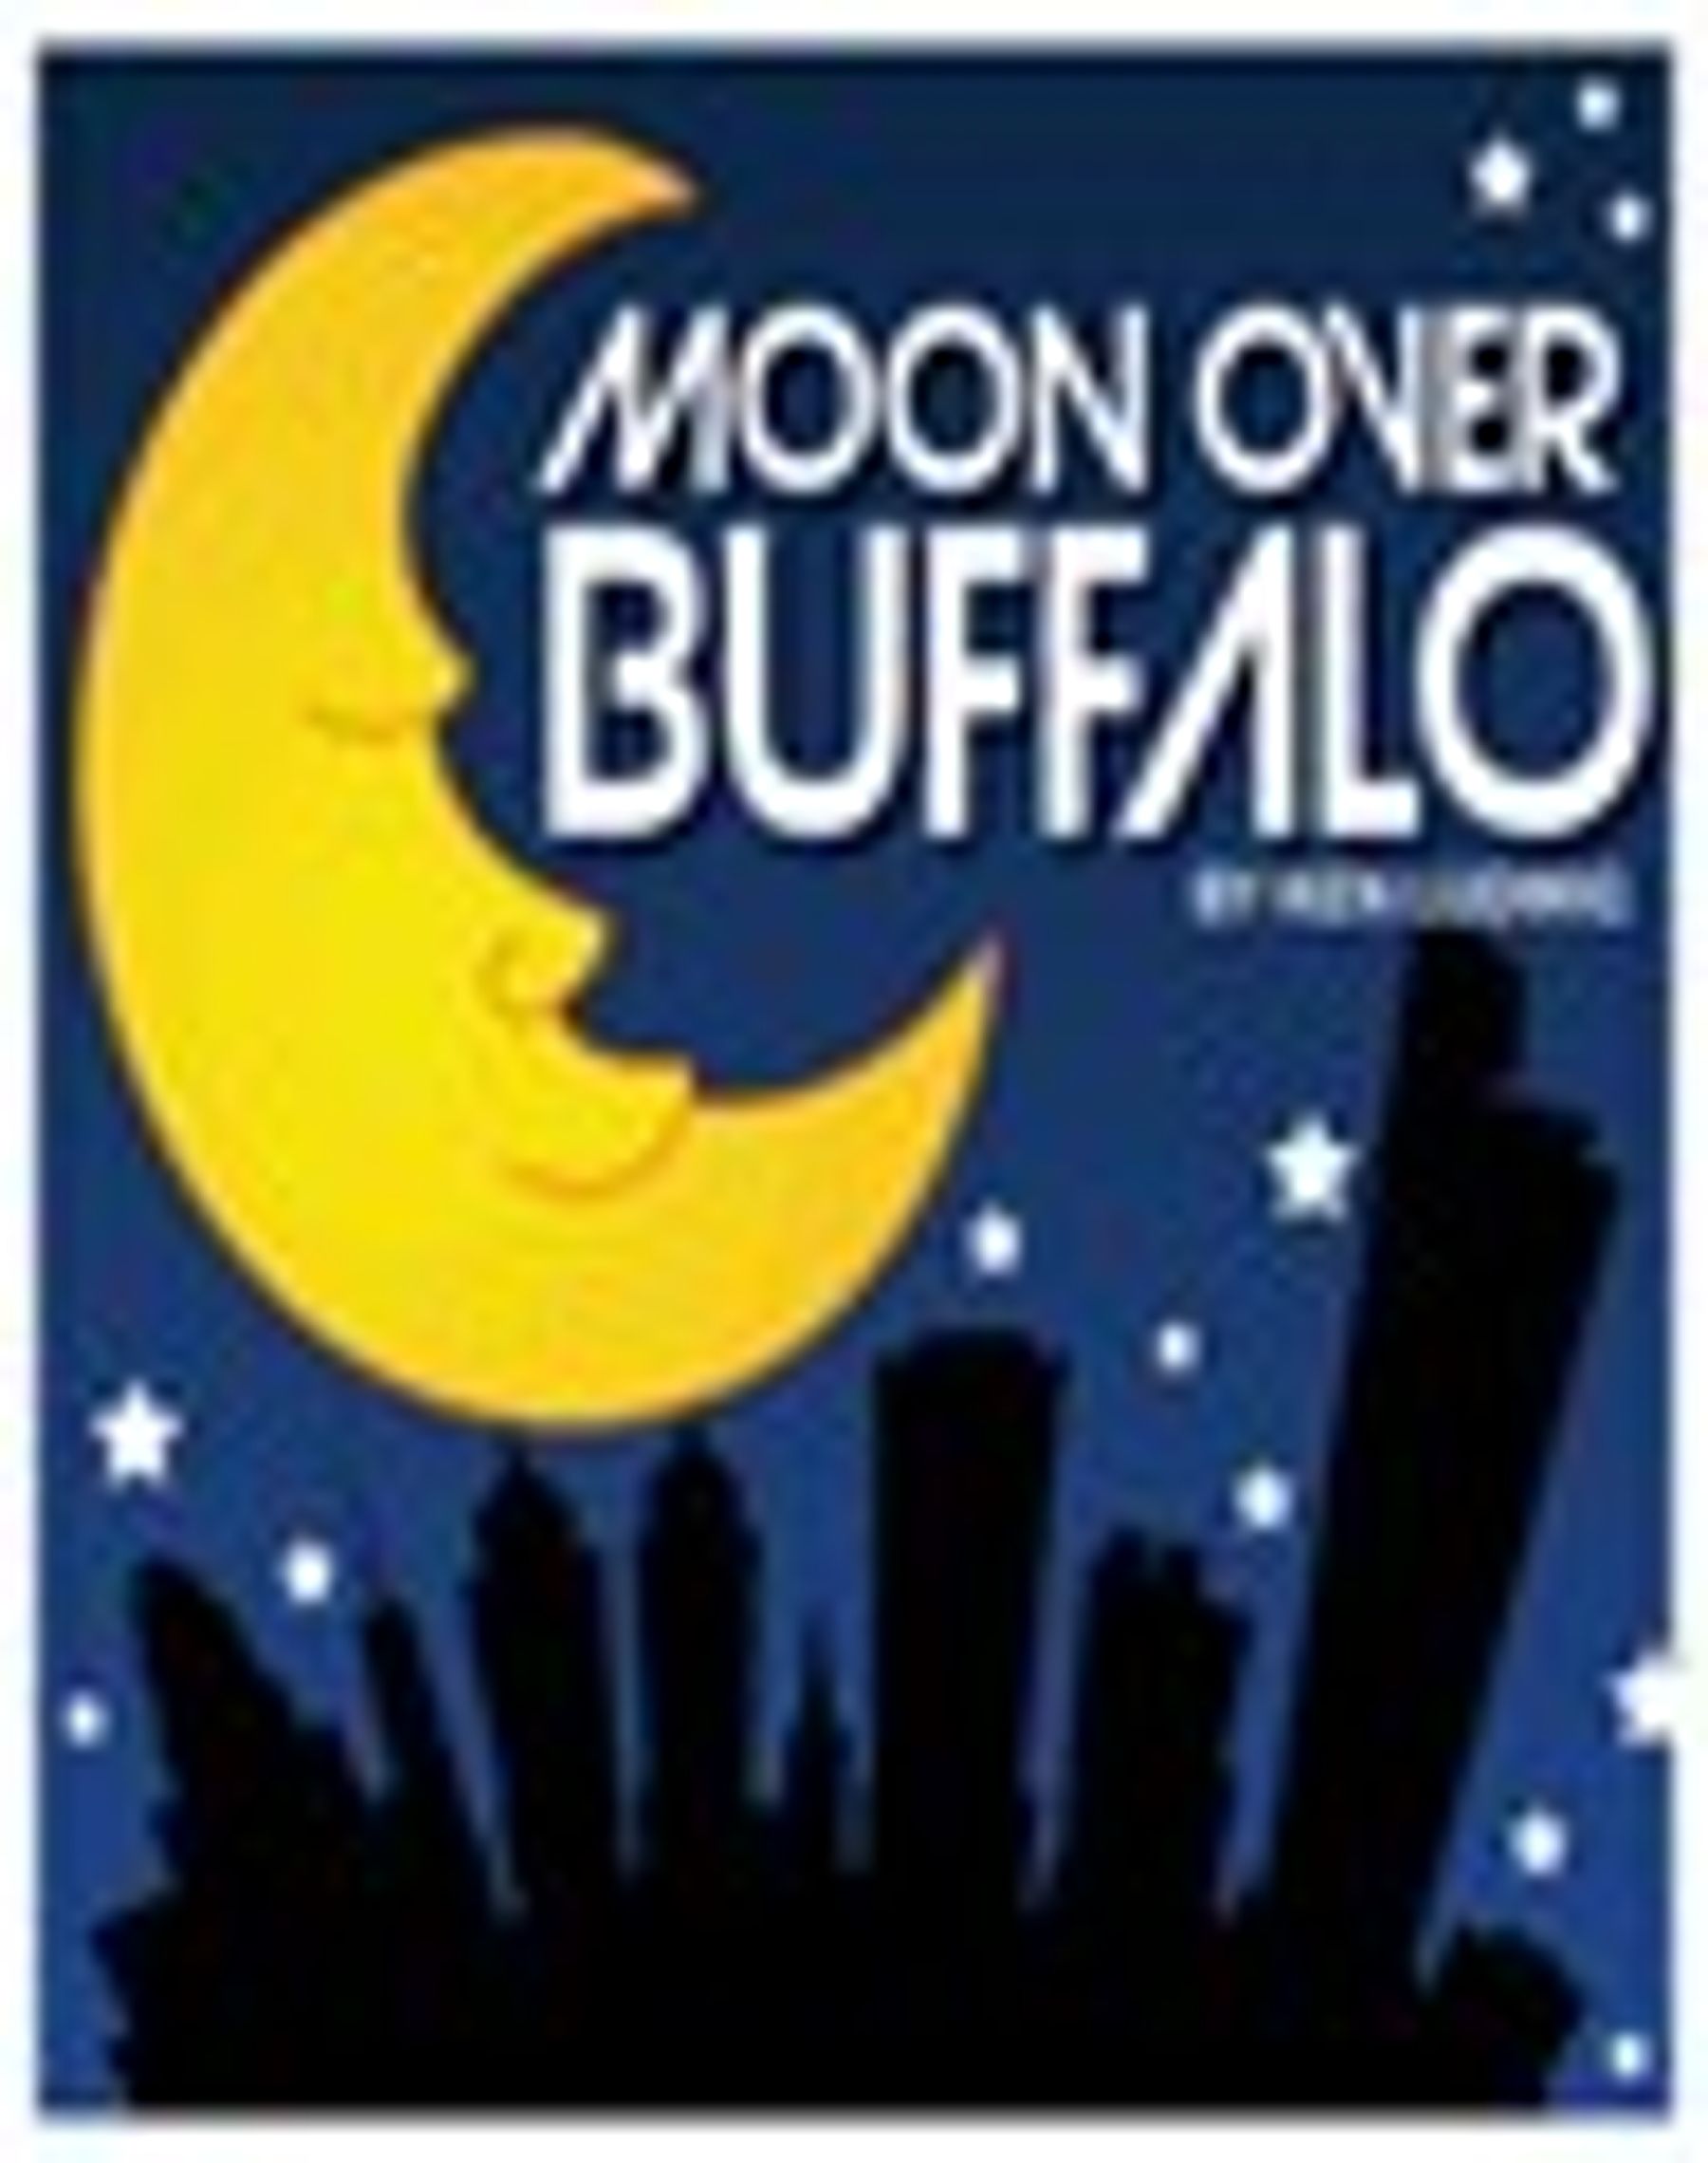 LAW - Moon Over Buffalo